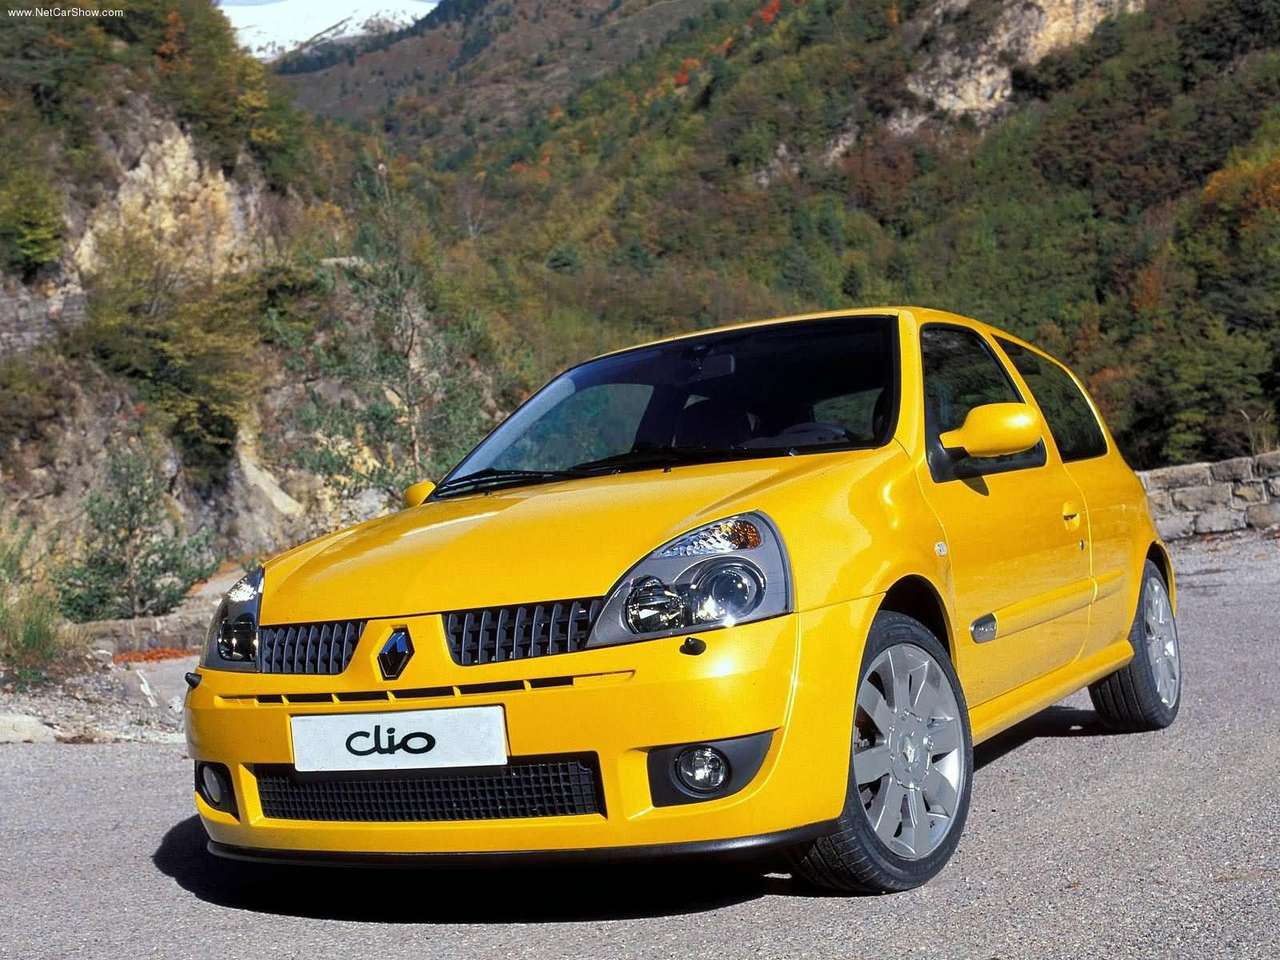 Renault Clio Renaultsport, Renault Clio, Renault, Clio, Renaultsport, Clio 182, 182, hot hatch, track car, motoring, automotive, car, cars, French car, hot hatch, track day, sport car, motoring, automotiive, ebay, ebay motors, autotrader